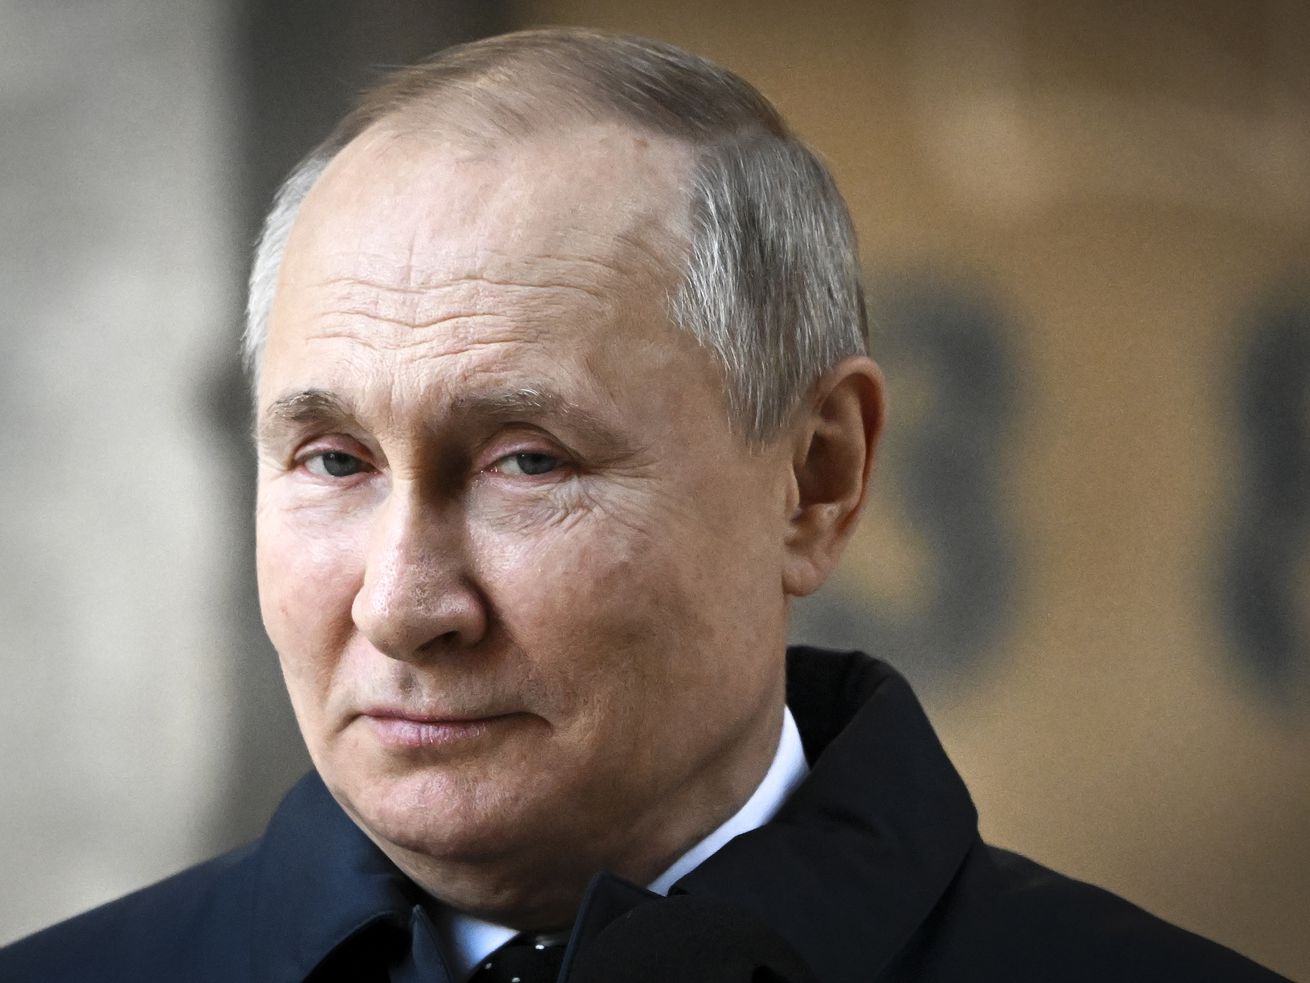 No, Putin is not actually achieving his goals in Ukraine